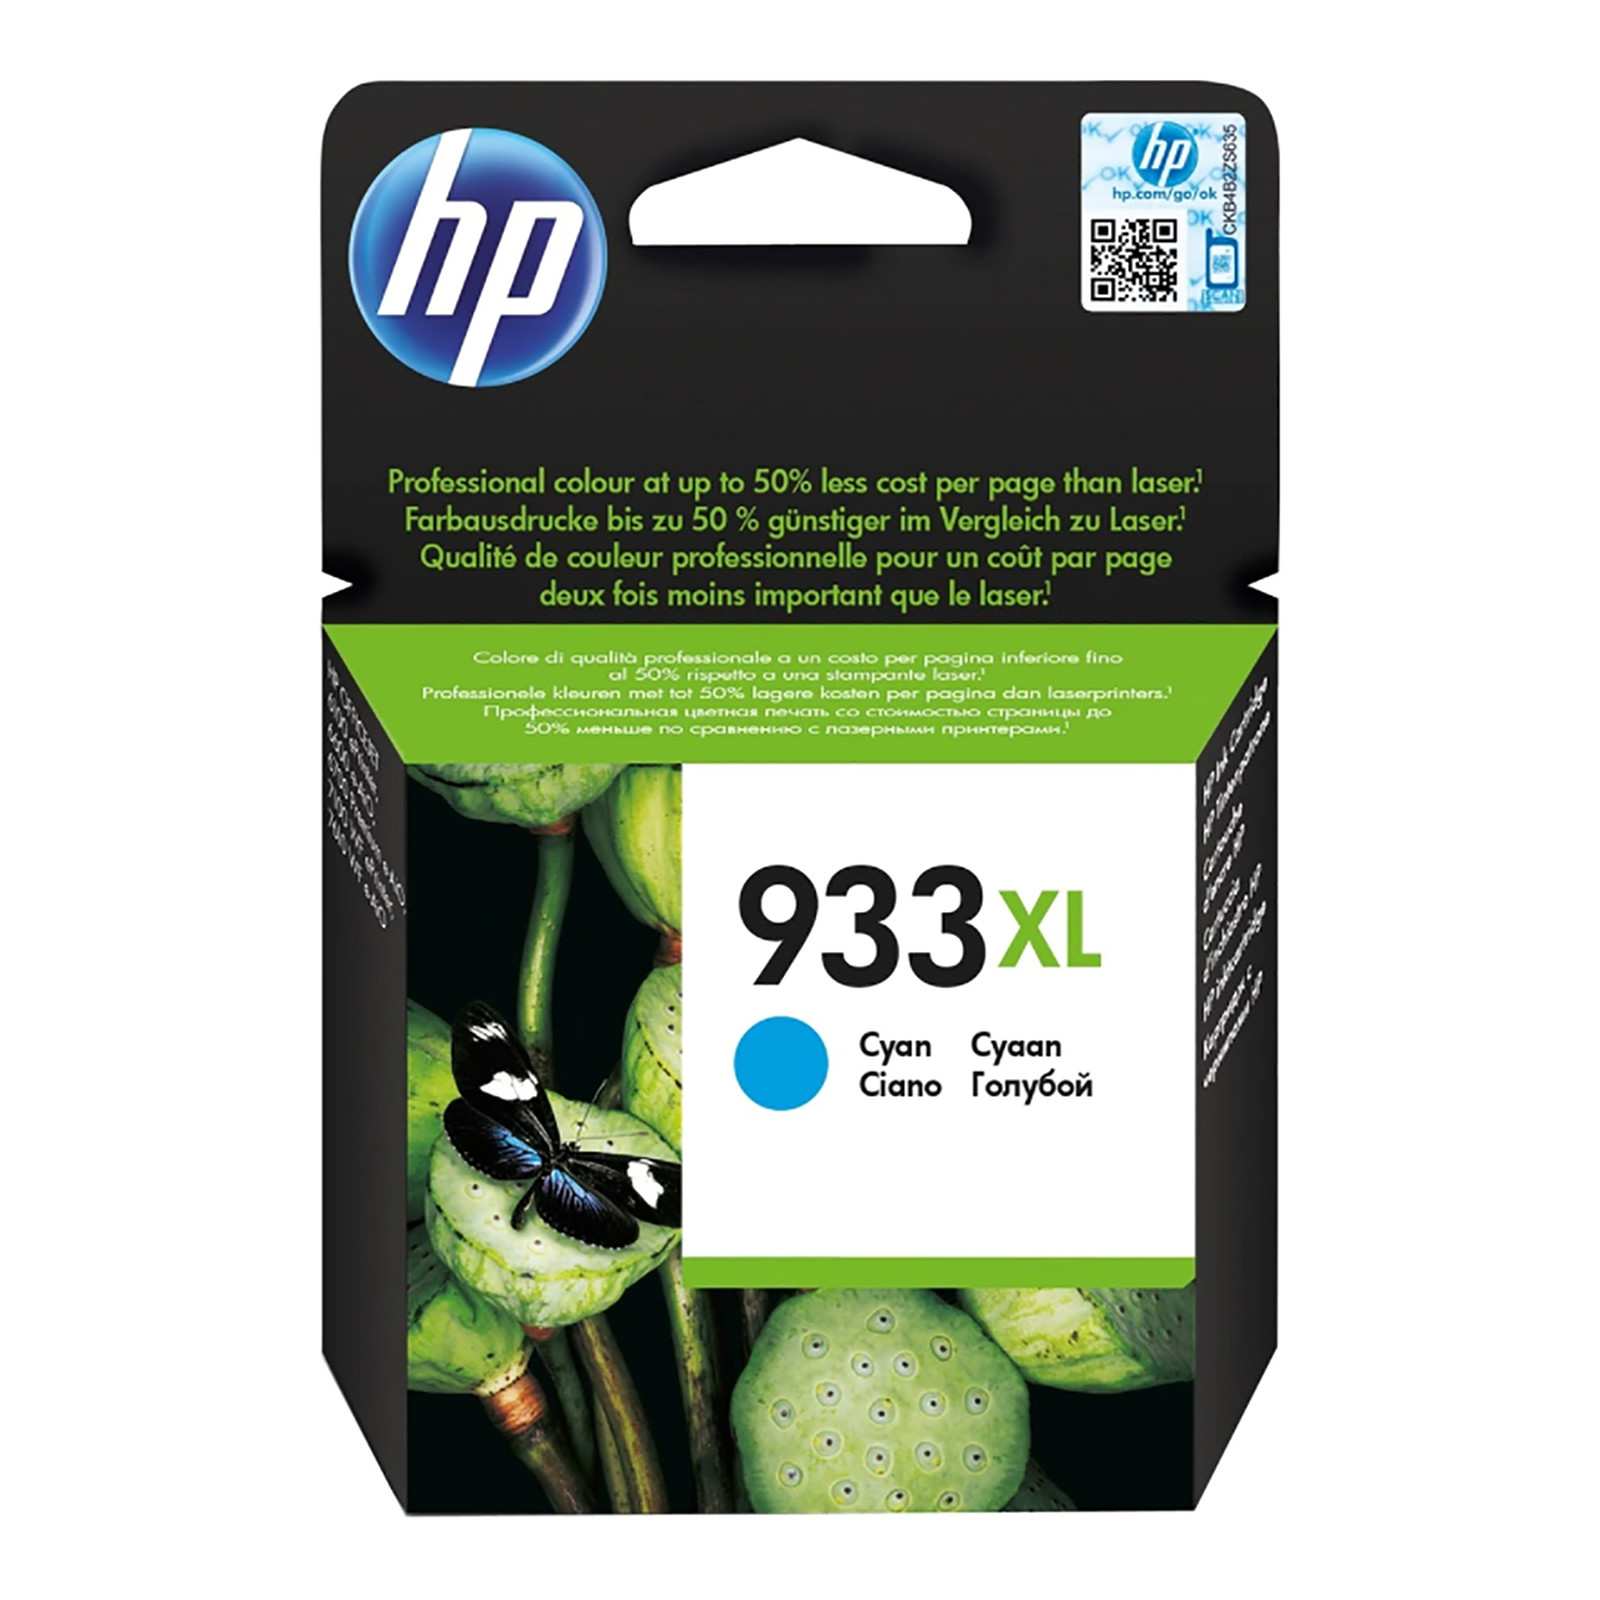 HP Officejet 933XL Cyan (CN054AE) - Cartouche imprimante HP